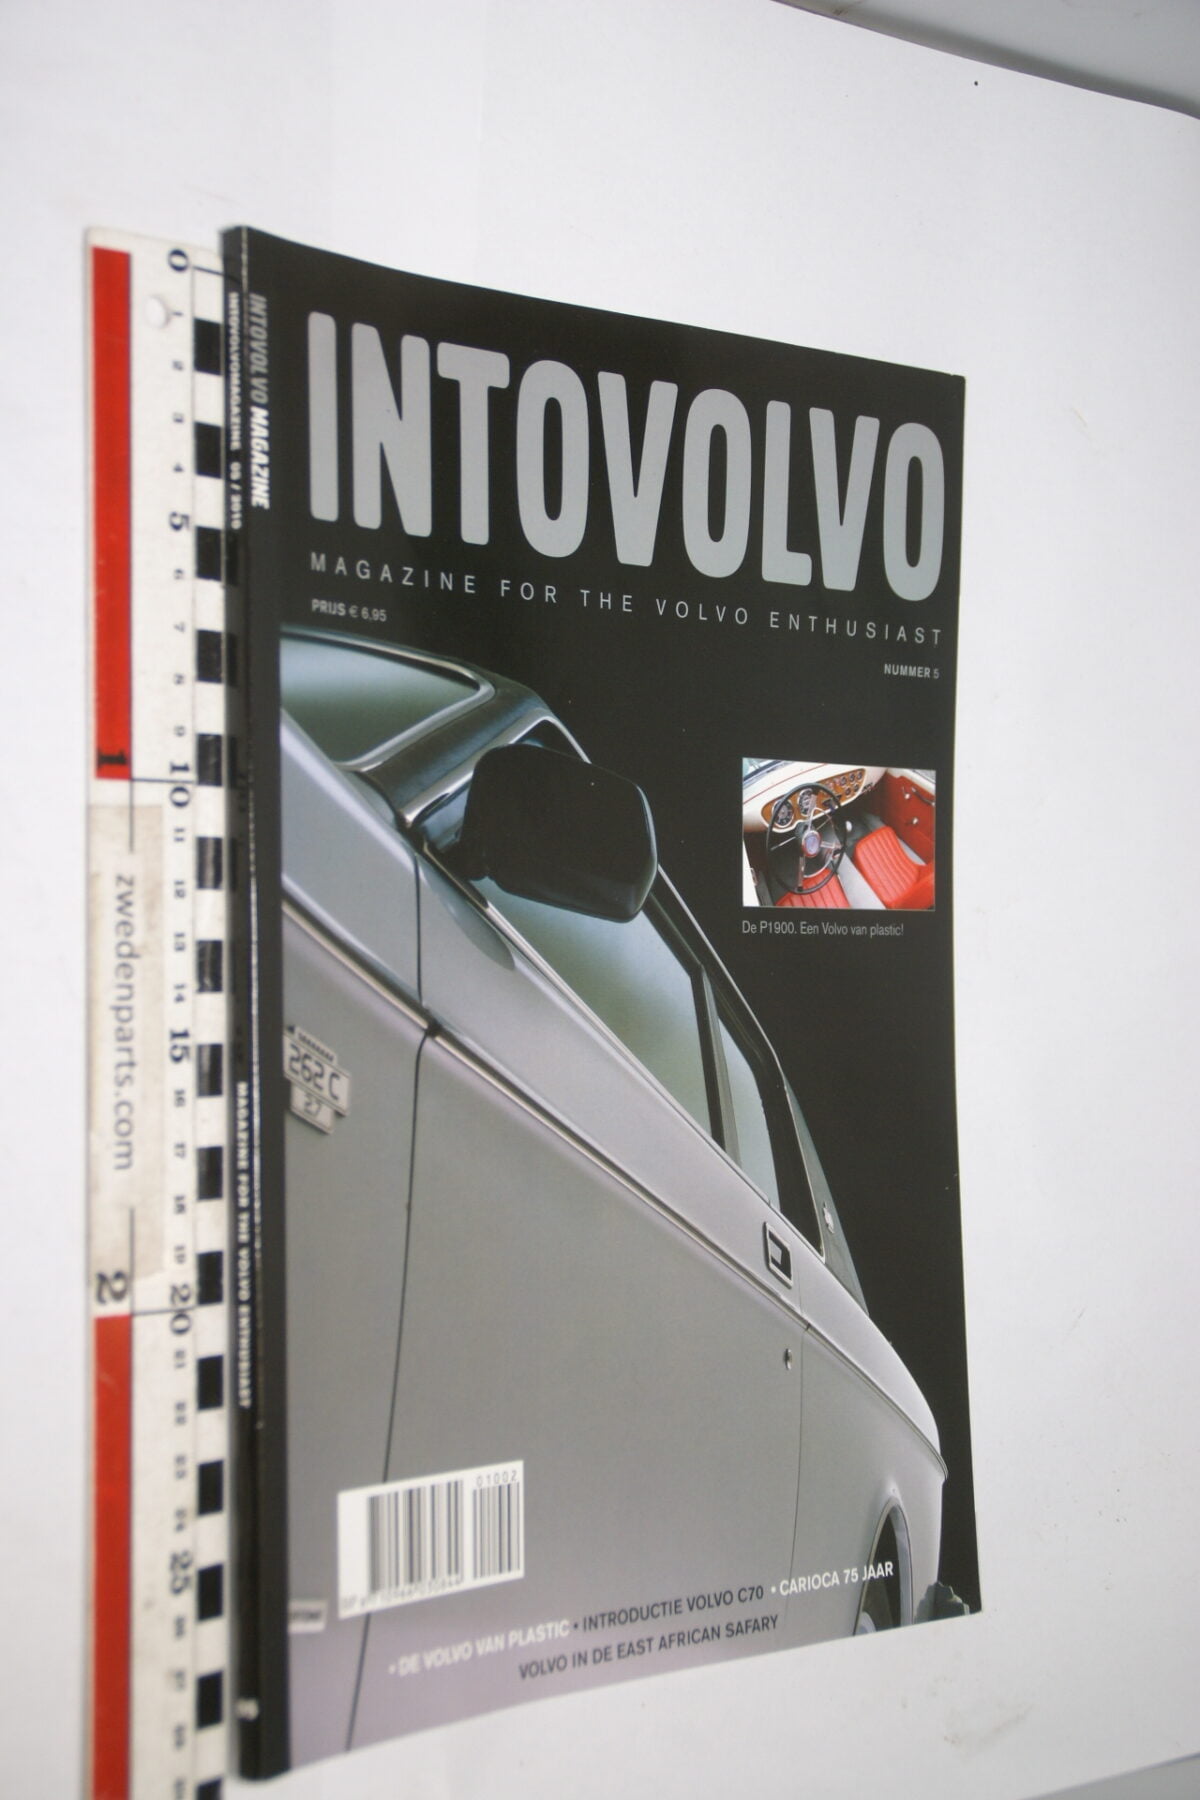 DSC09575 2010 mei tijdschrift IntoVolvo nr 5 Volvo P1900 Carioca C70-ea41b847